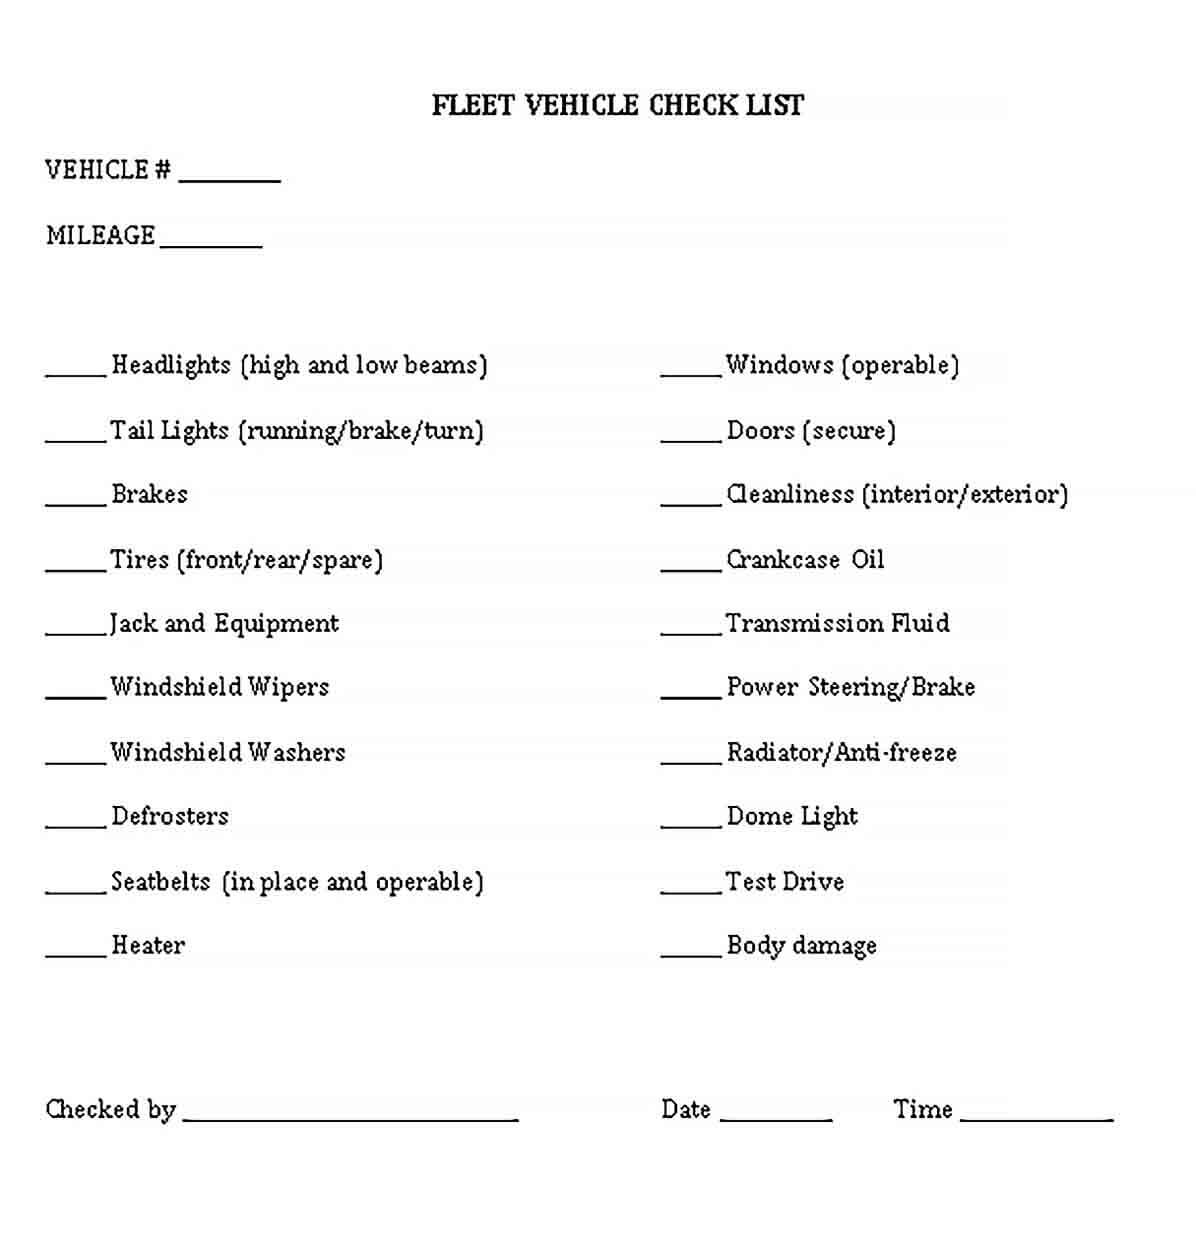 Sample Fleet Vehicle Checklist Template